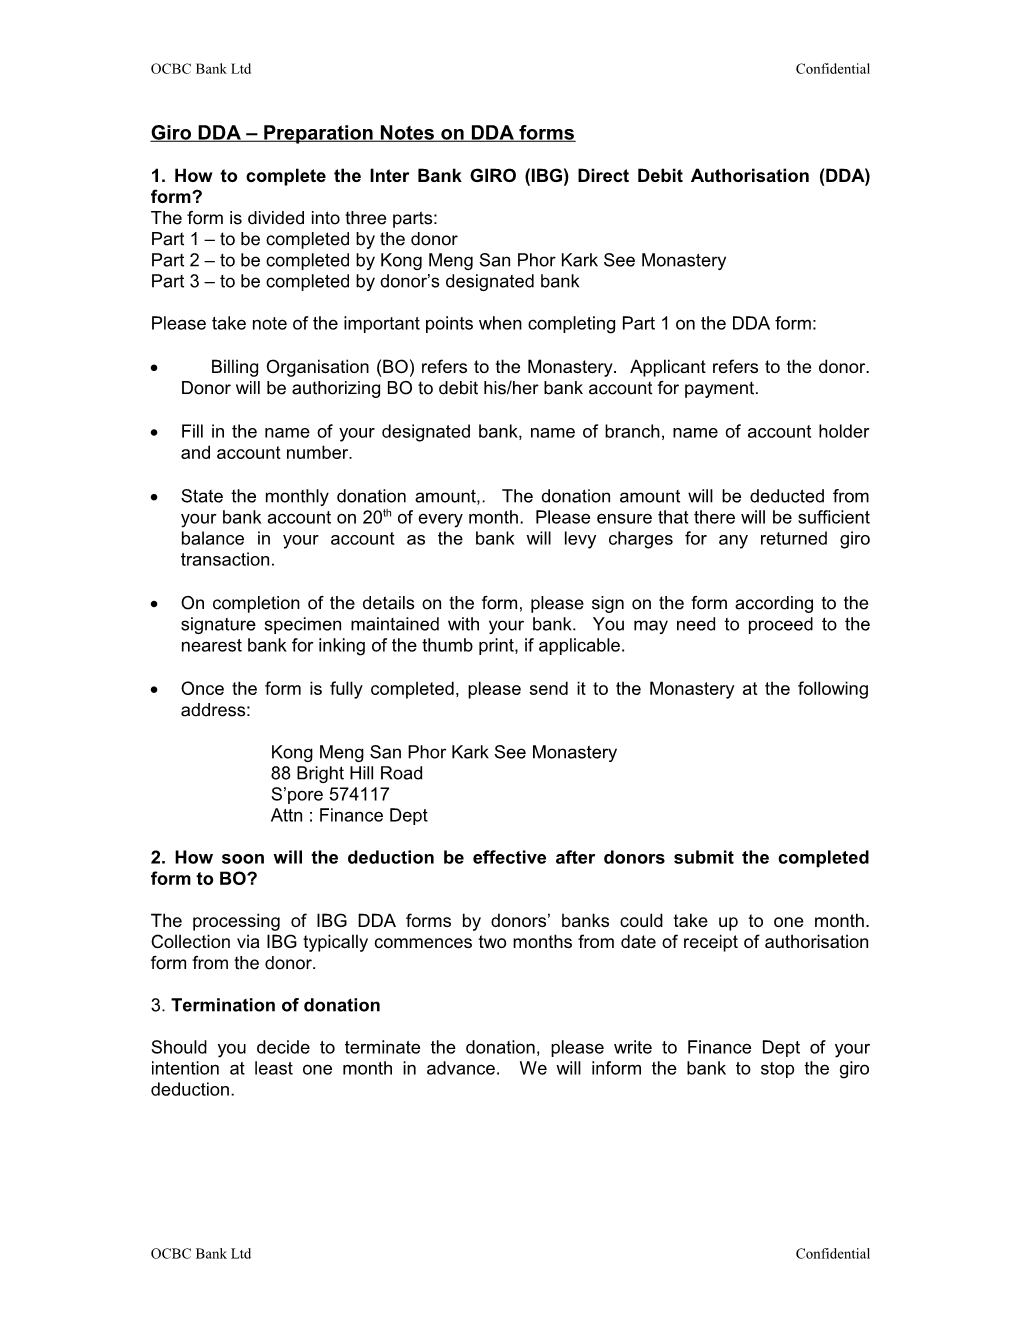 Giro DDA Preparation Notes on DDA Forms